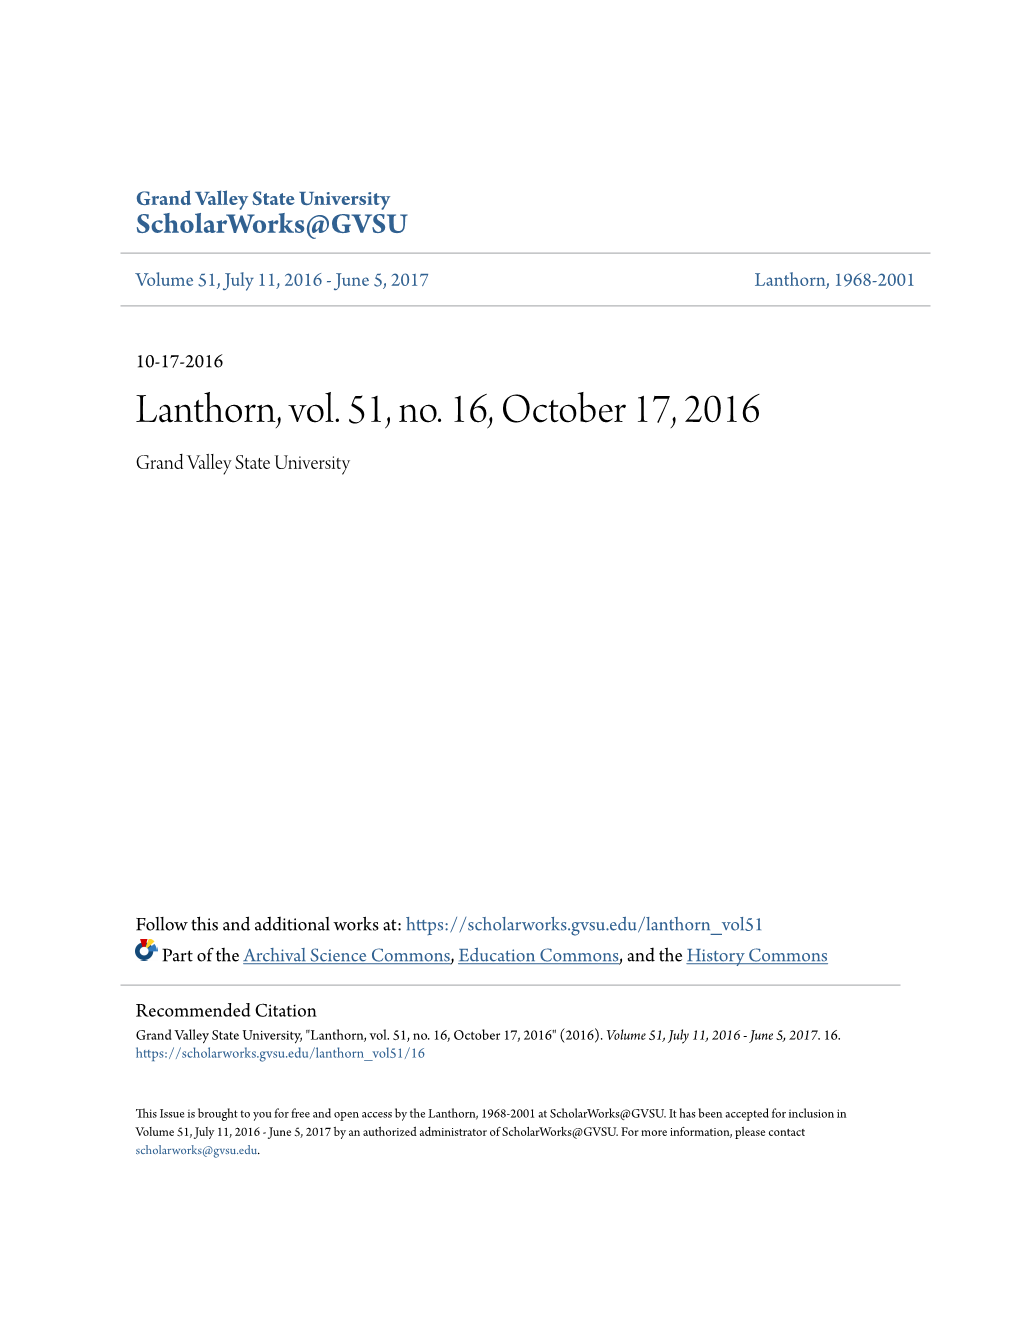 Lanthorn, Vol. 51, No. 16, October 17, 2016 Grand Valley State University